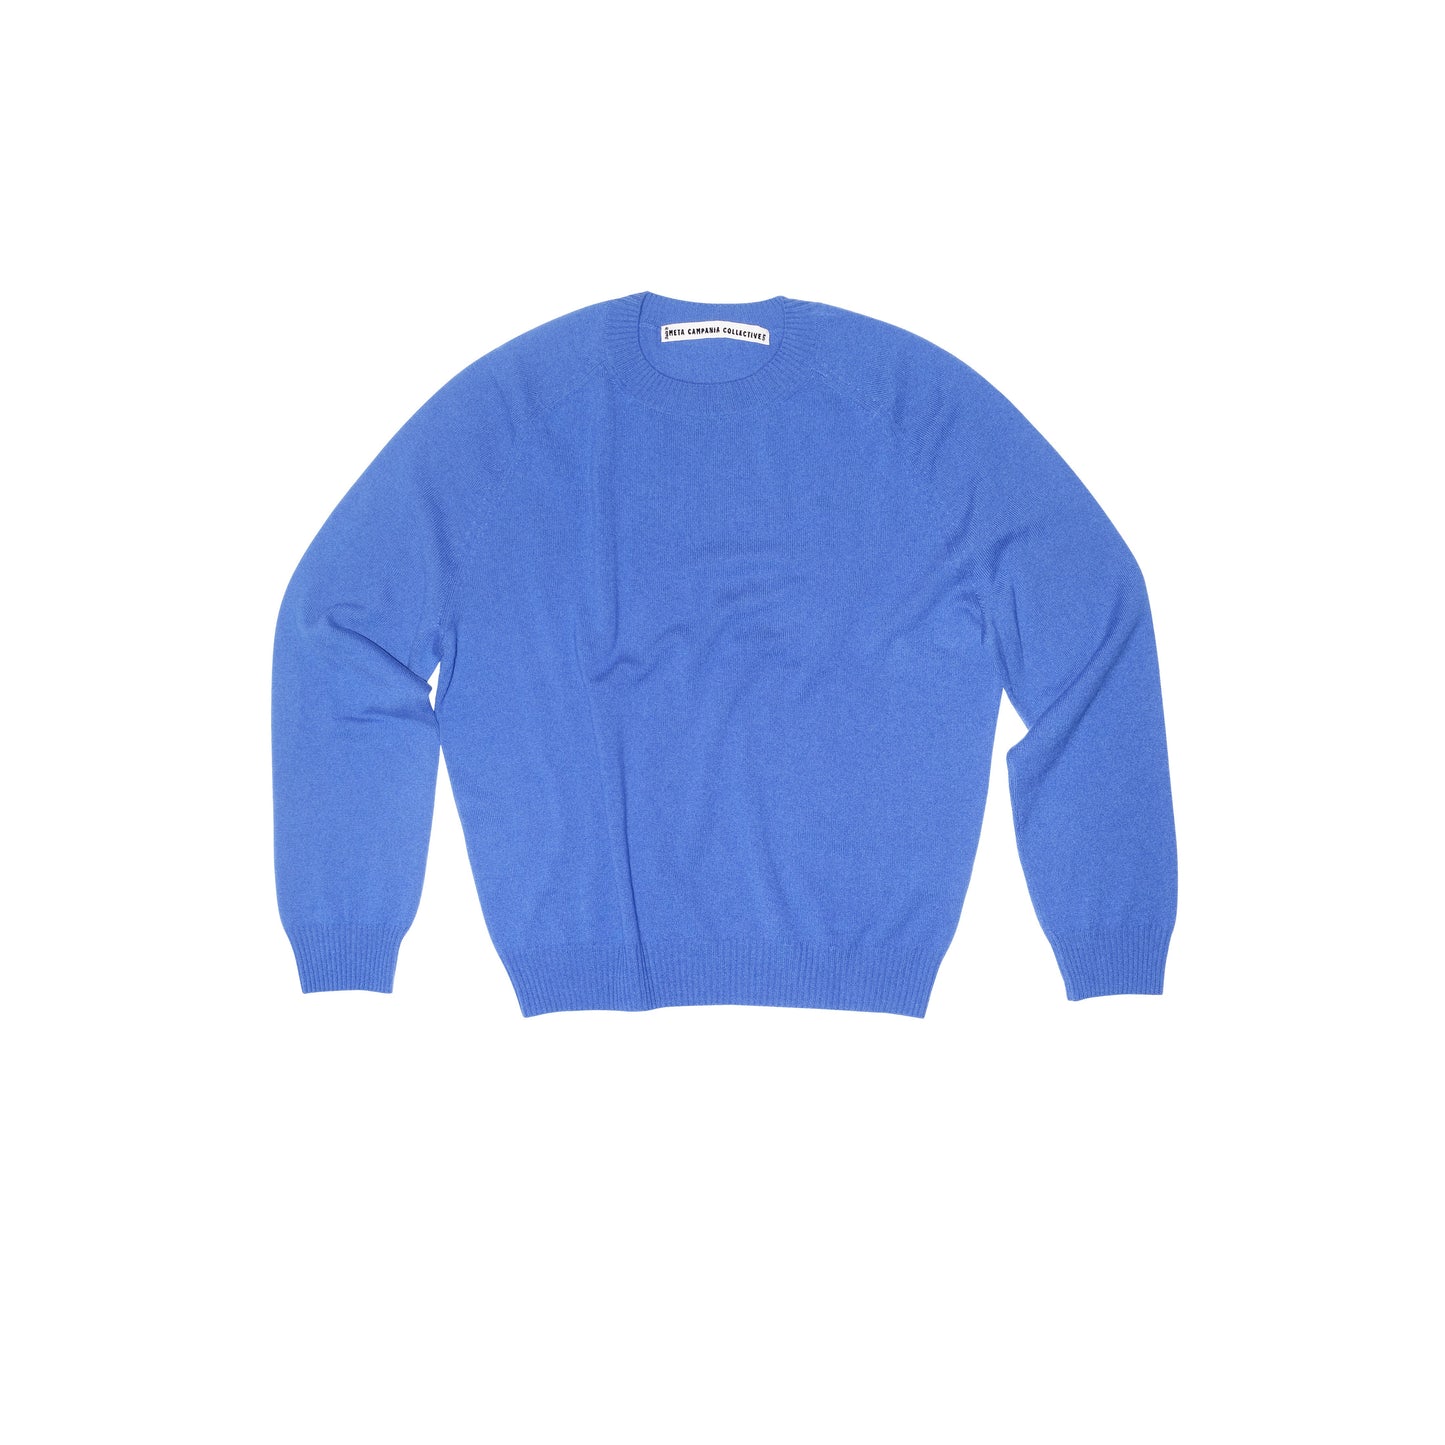 Jack Crew Neck Cashmere Sweater Meta Blue